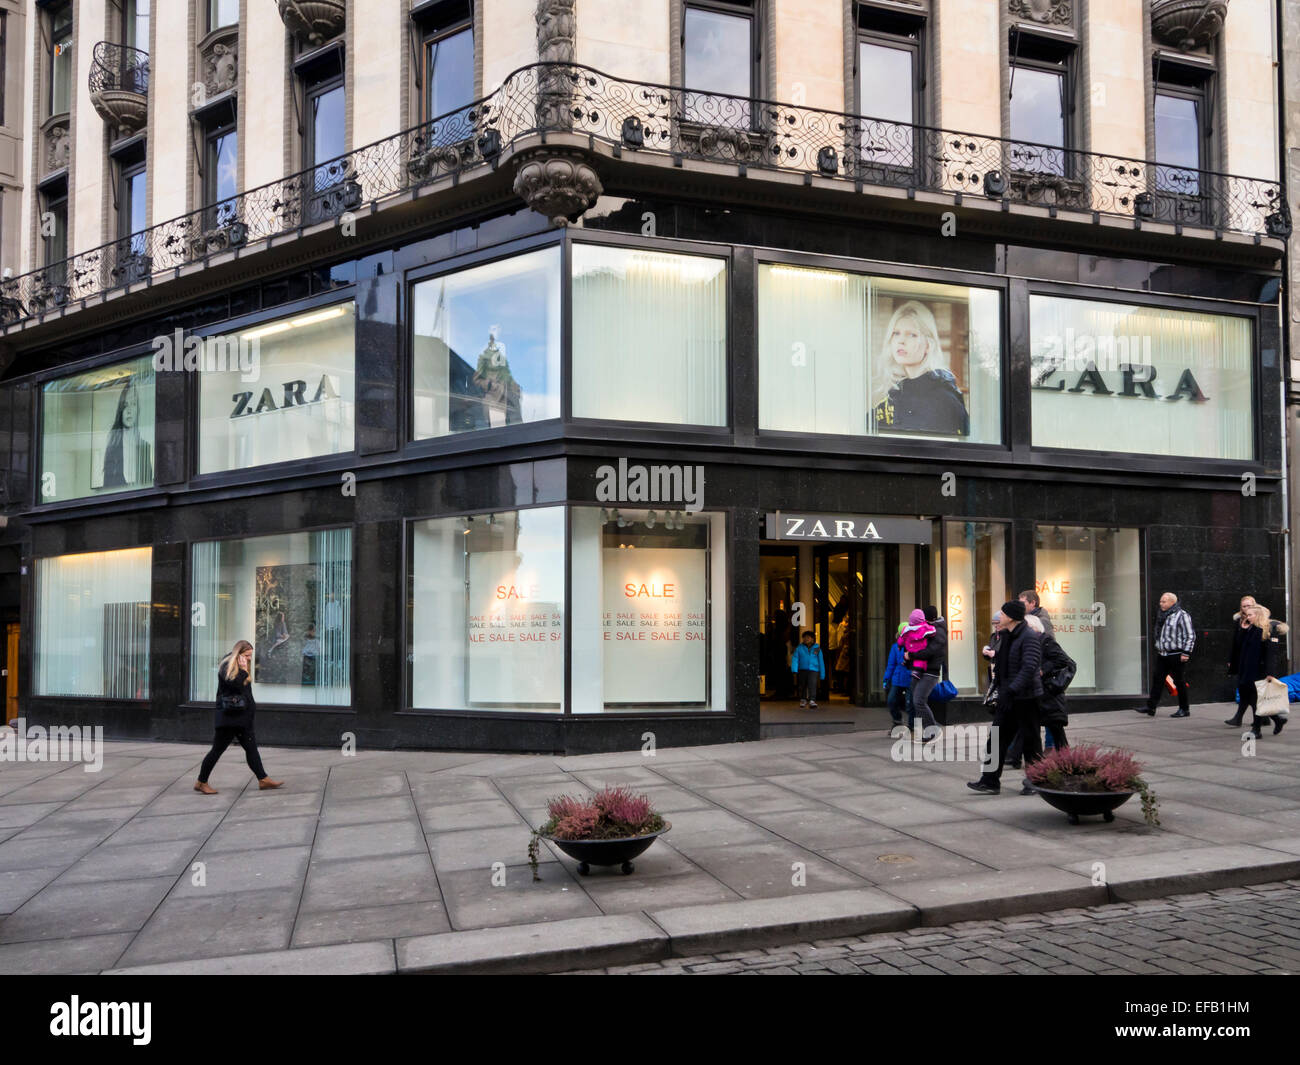 Zara fashion brand shop centrally placed in Karl Johans gate Oslo Norway  Stock Photo - Alamy